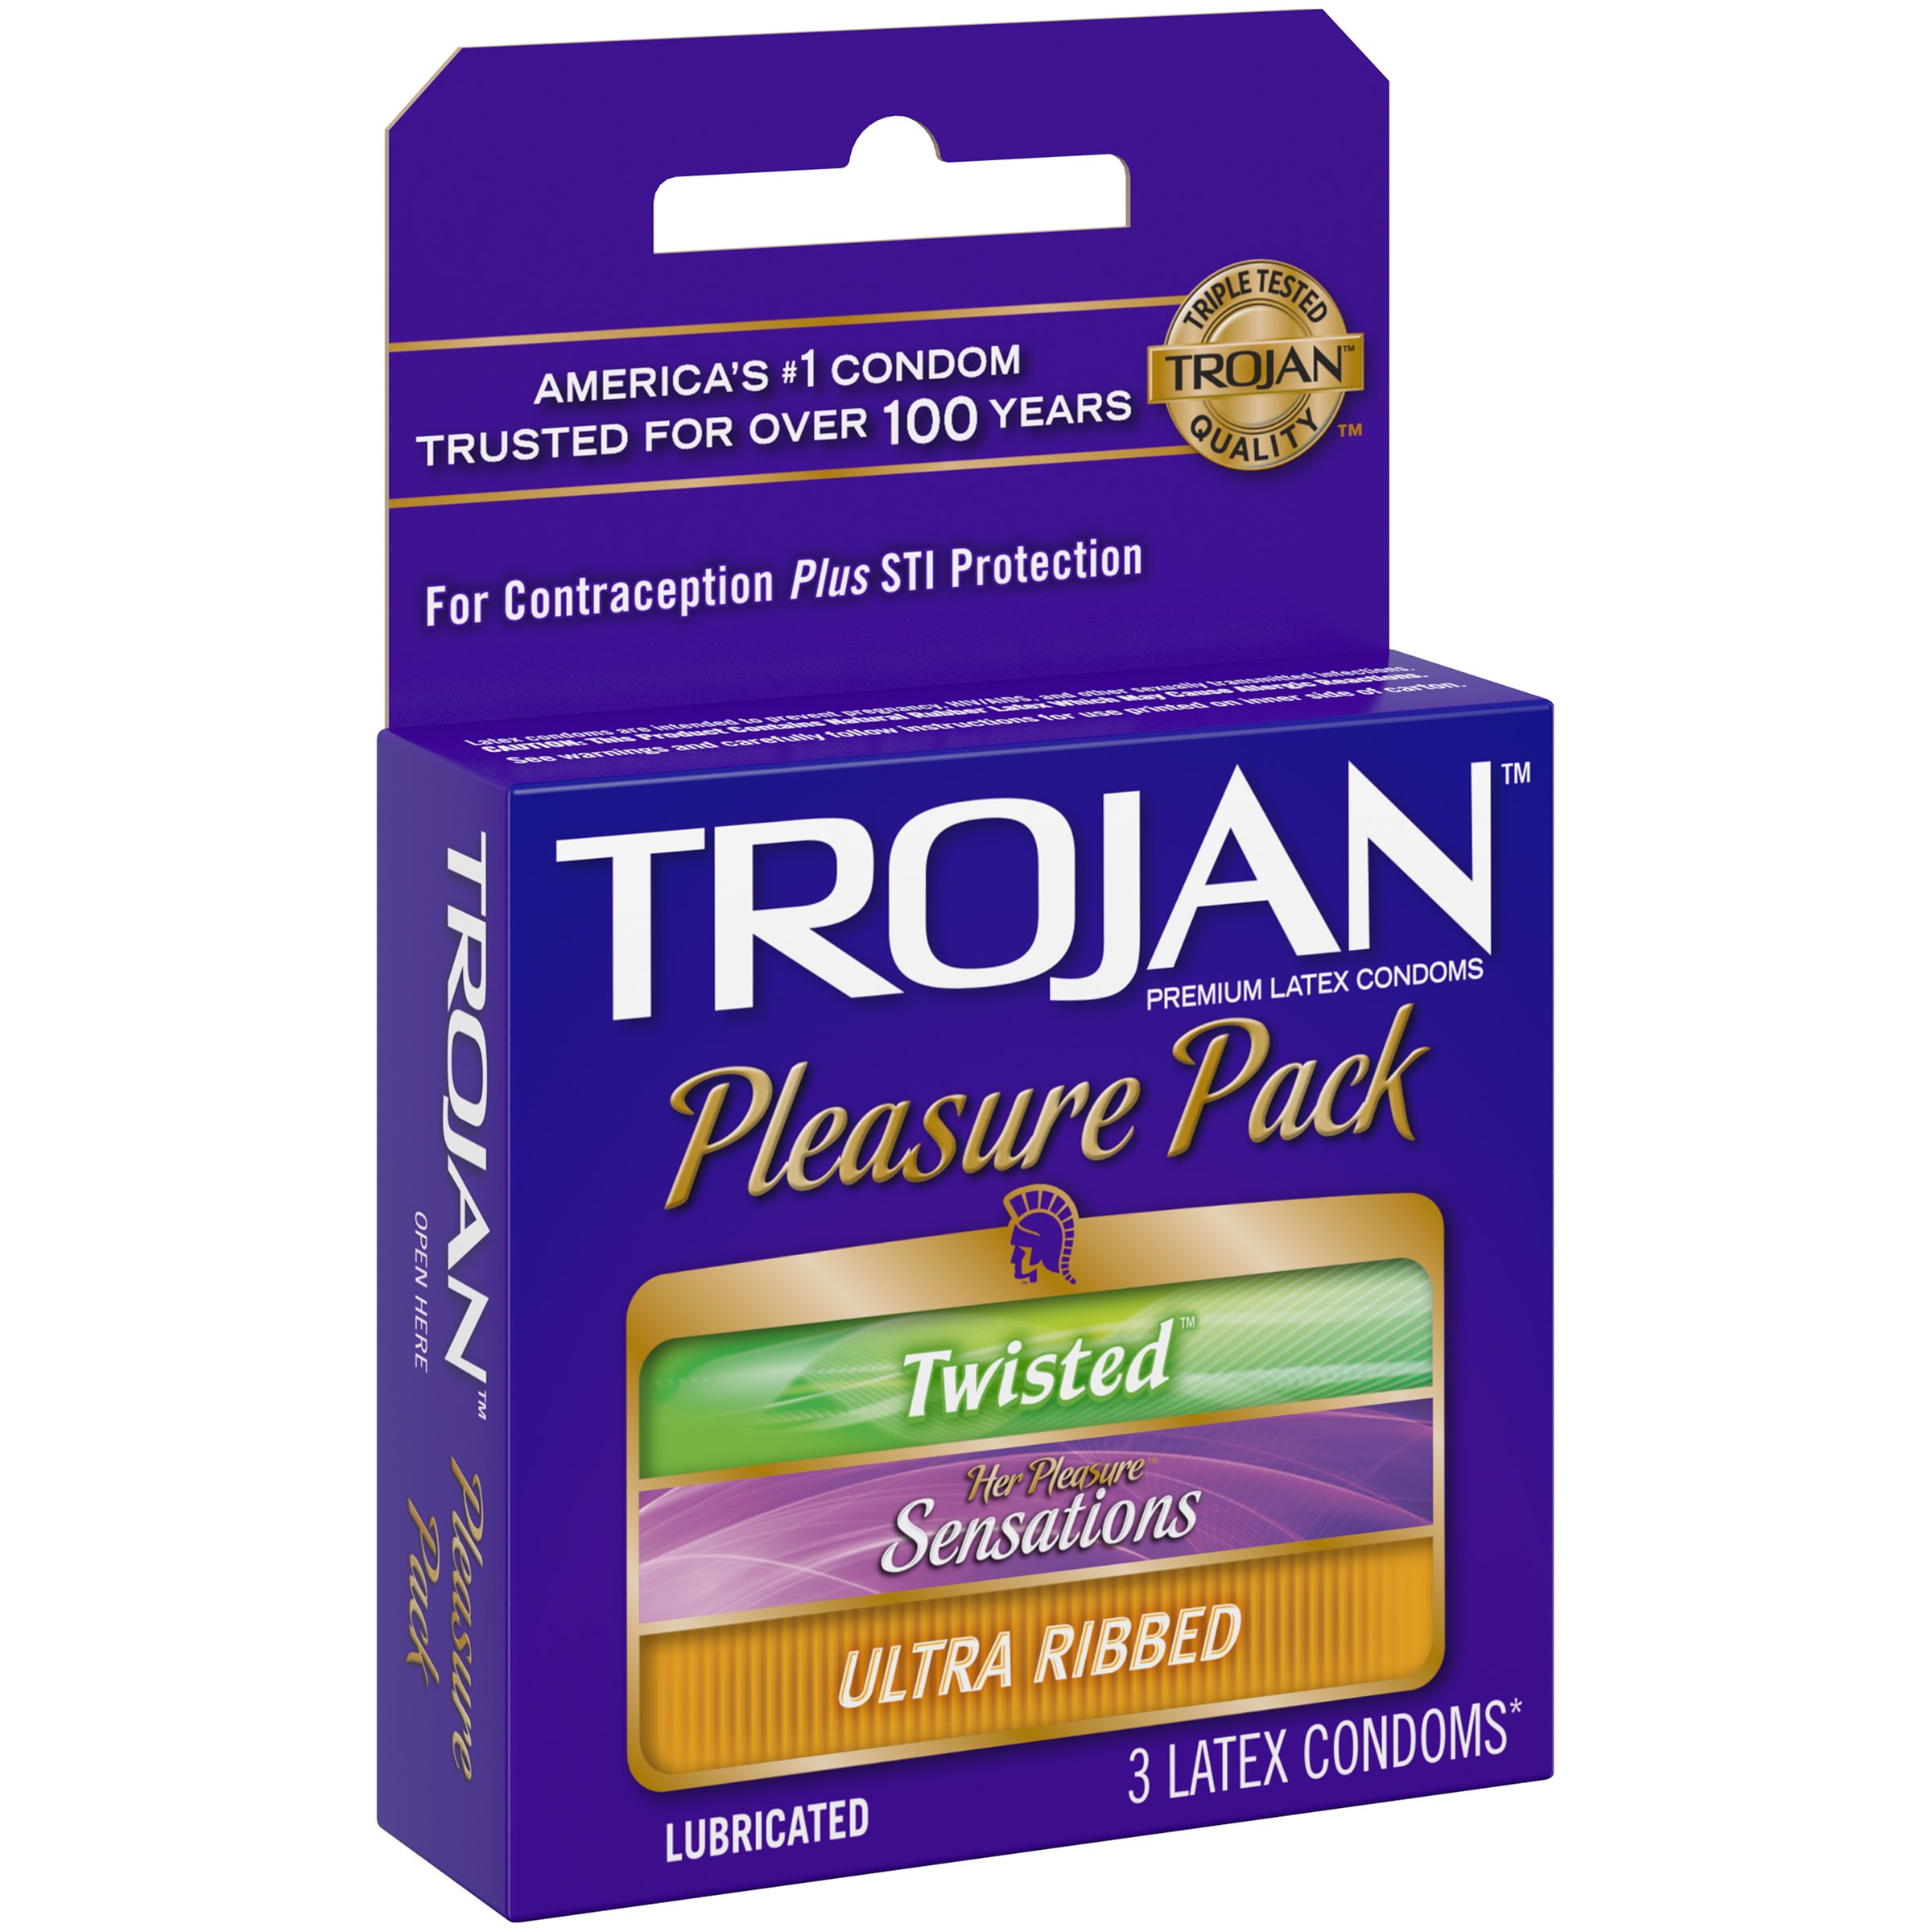 Trojan Pleasure Pack Latex Condoms.